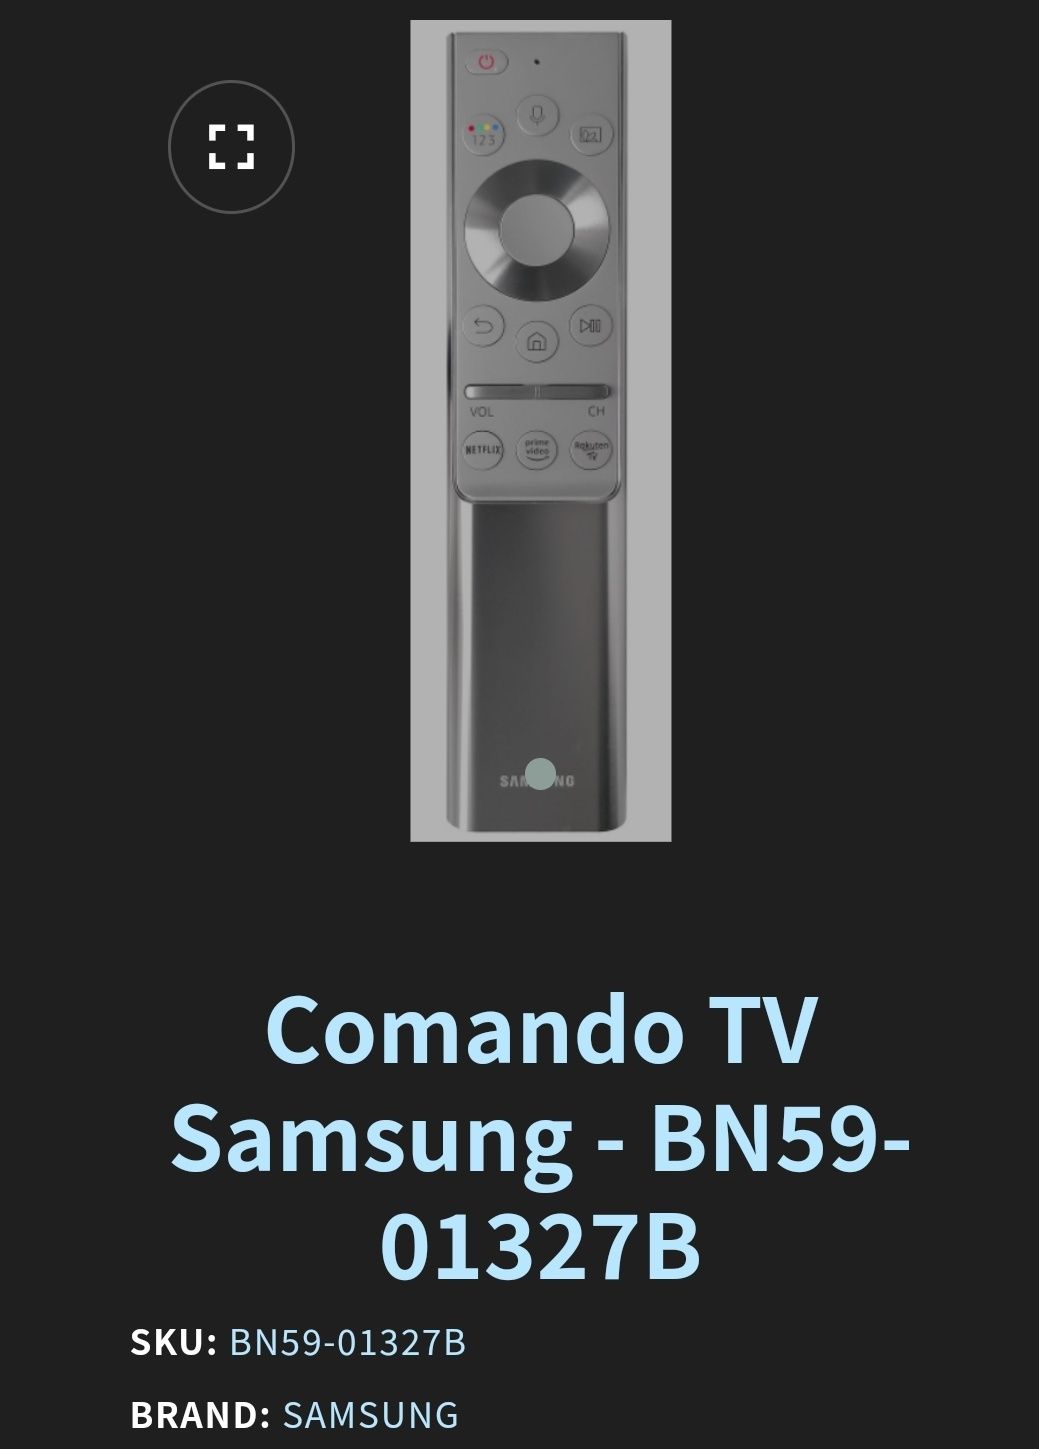 Comando TV,s Samsung